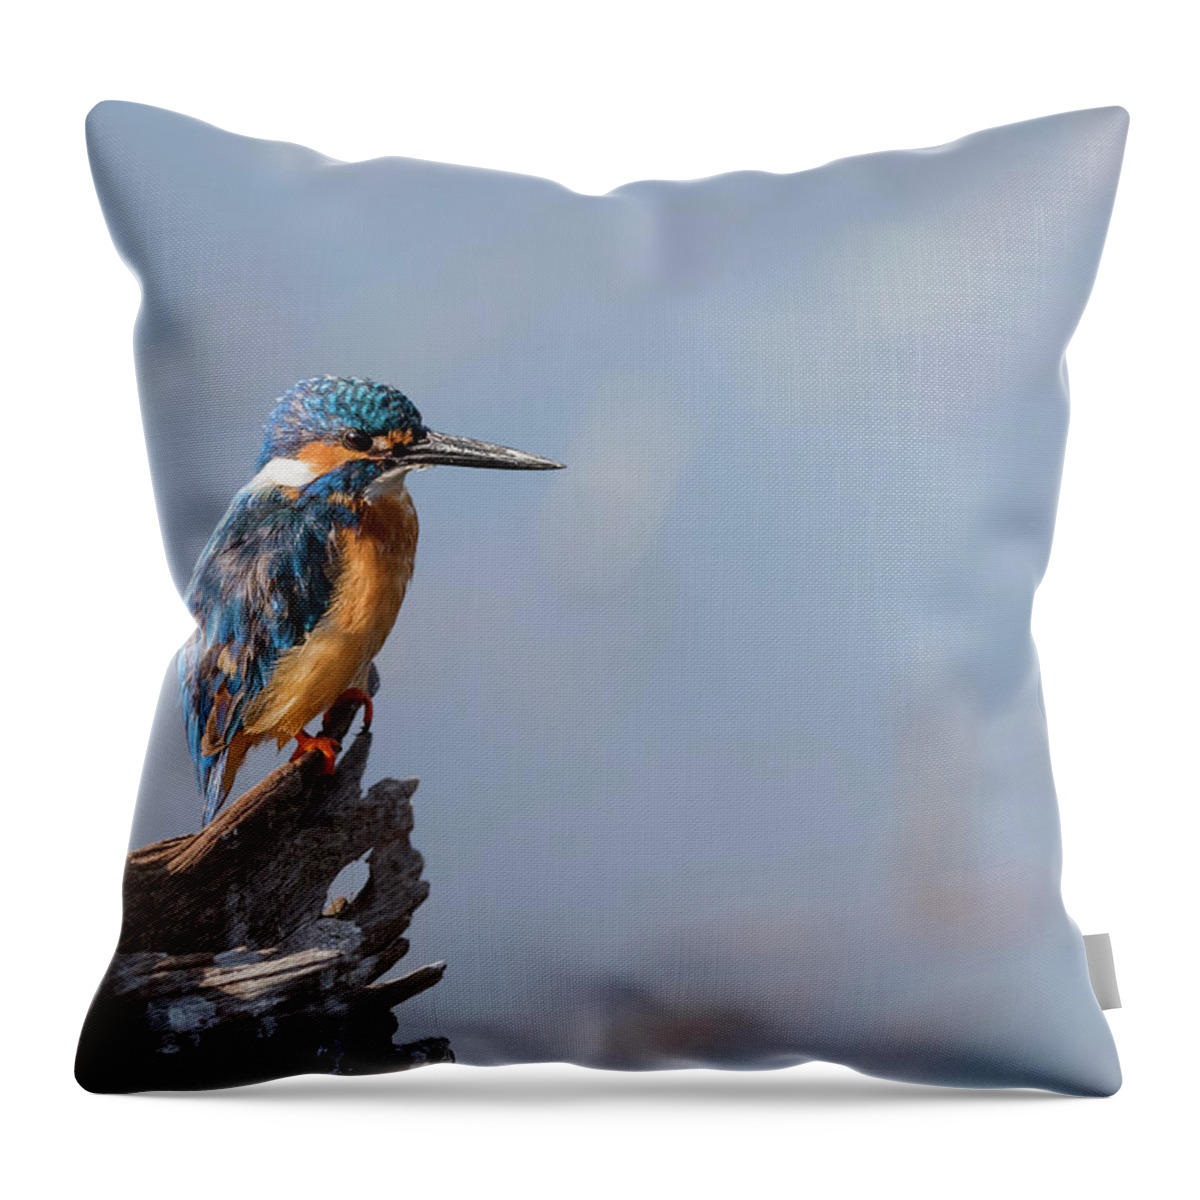 Common Kingfisher Throw Pillow featuring the photograph Common kingfisher by Puttaswamy Ravishankar